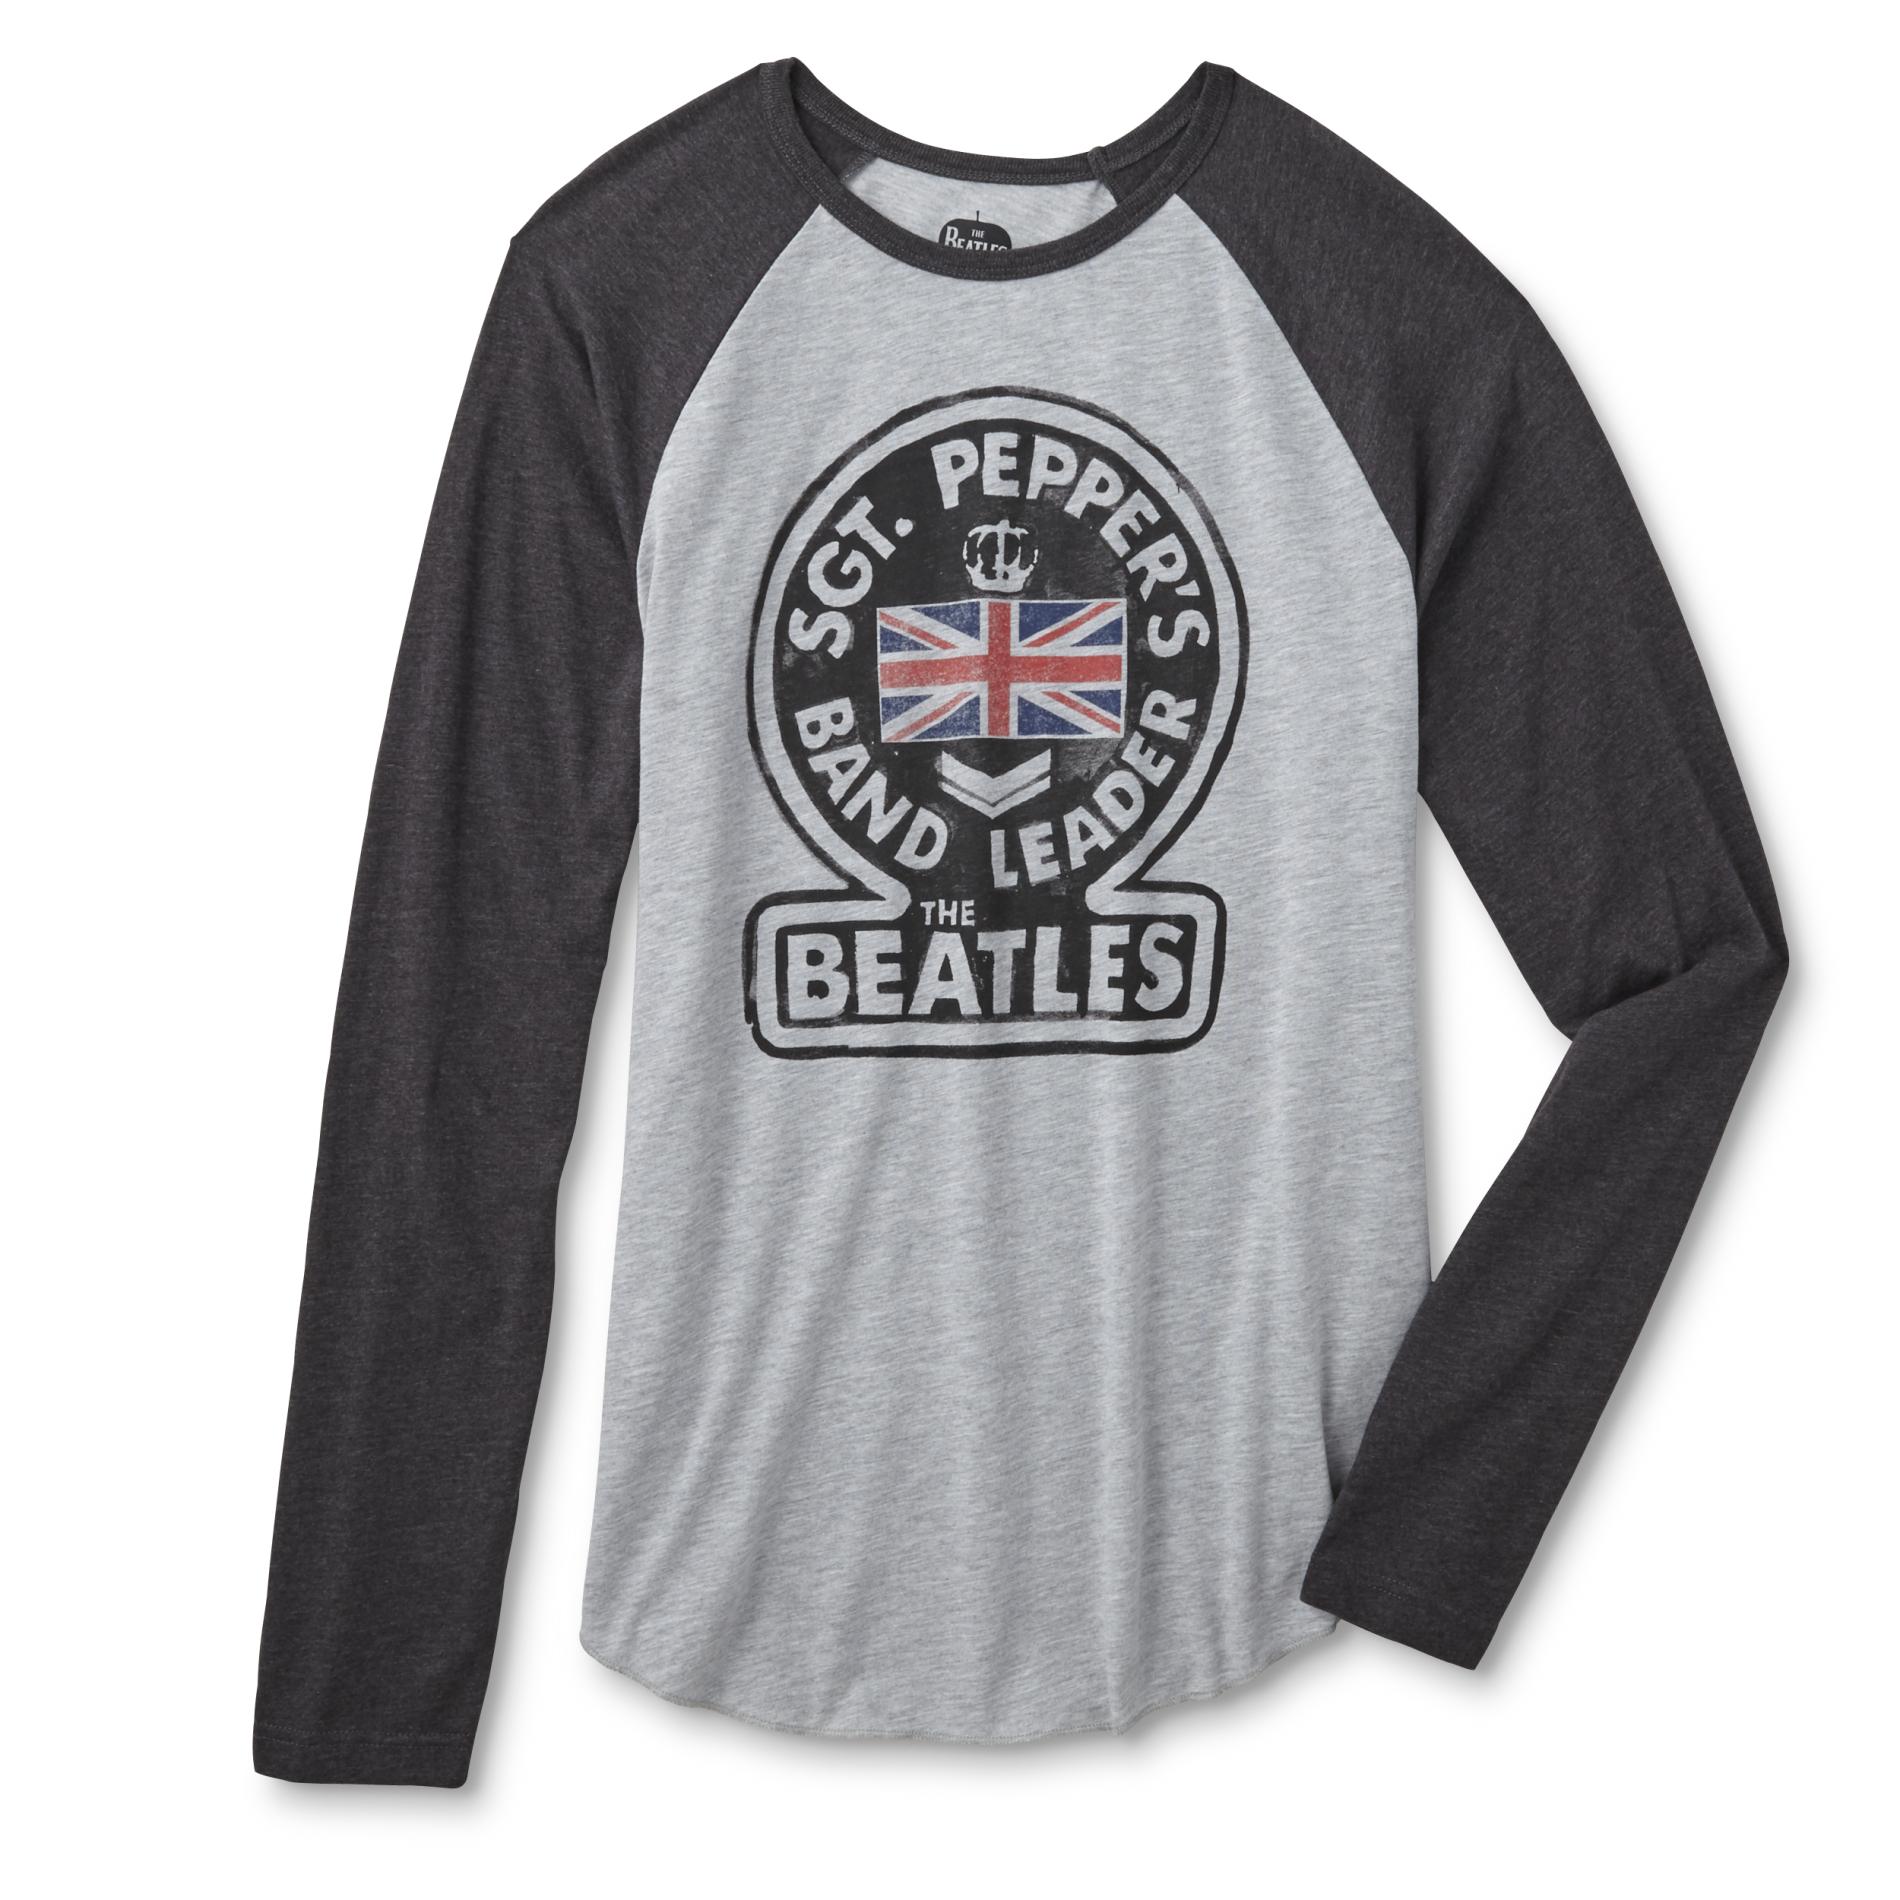 The Beatles Men's Graphic T-Shirt